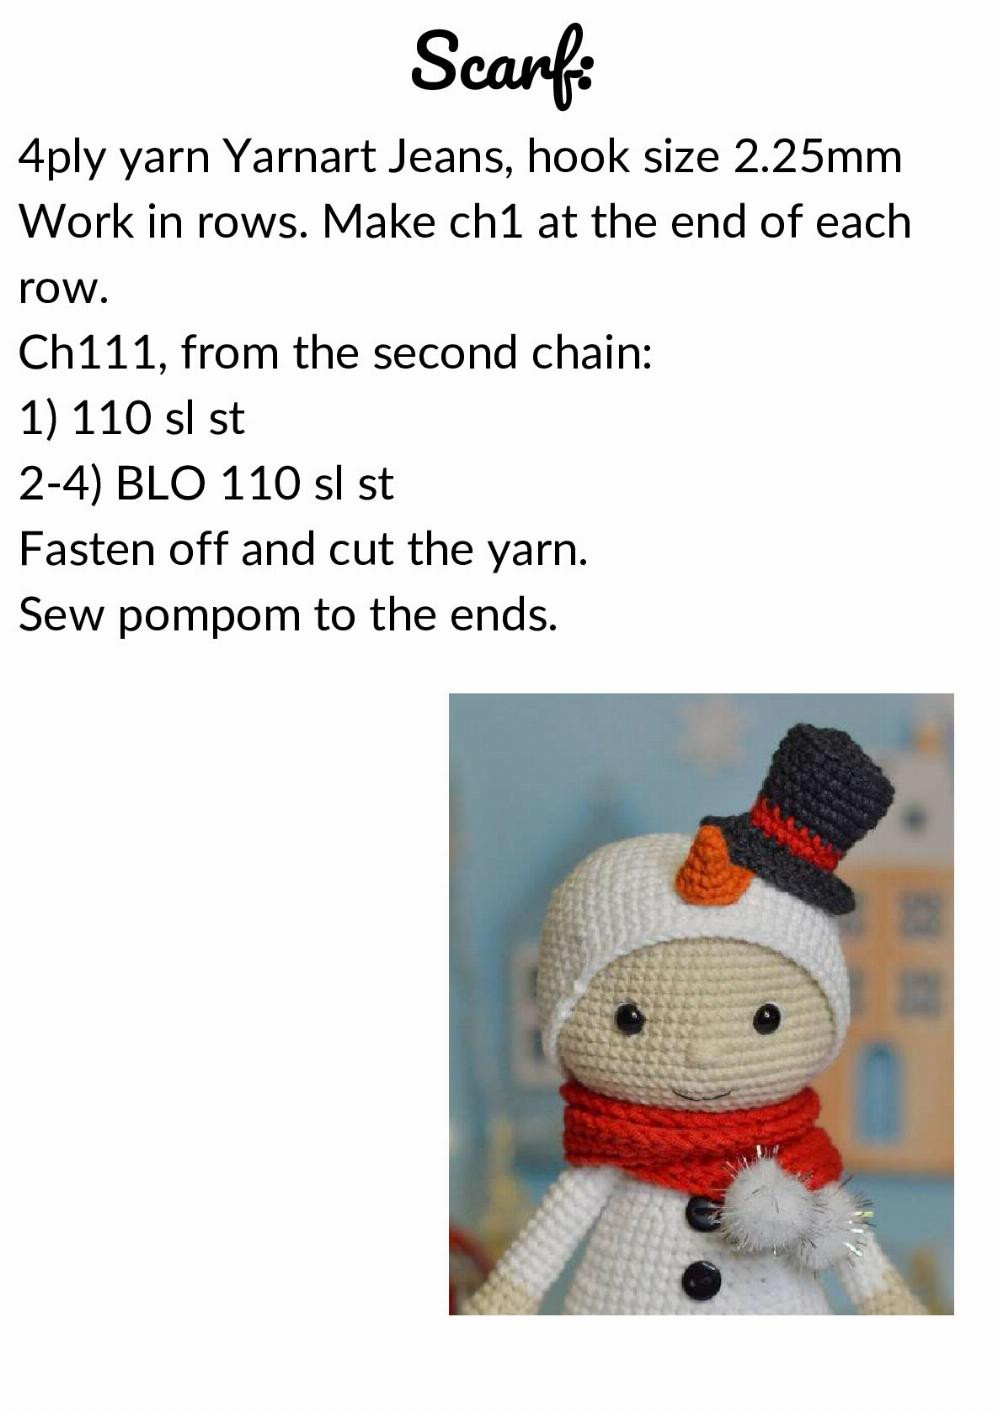 gingerbread and snowman crochet pattern